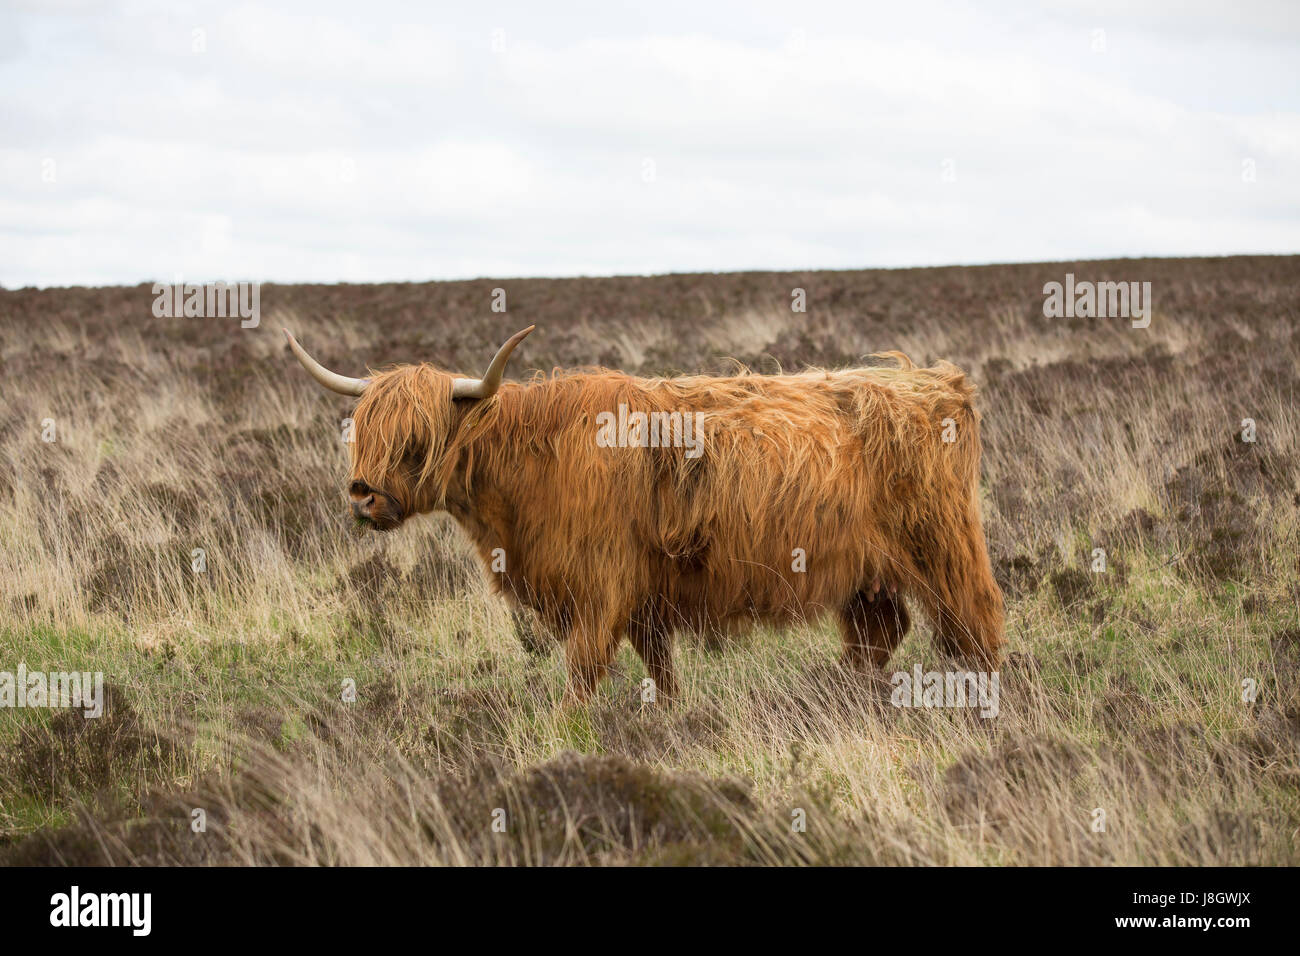 Long horned highland cow standing amongst dry bracken and heather on Exmoor National Park. Shaggy animal roaming free on windswept hillside. Stock Photo